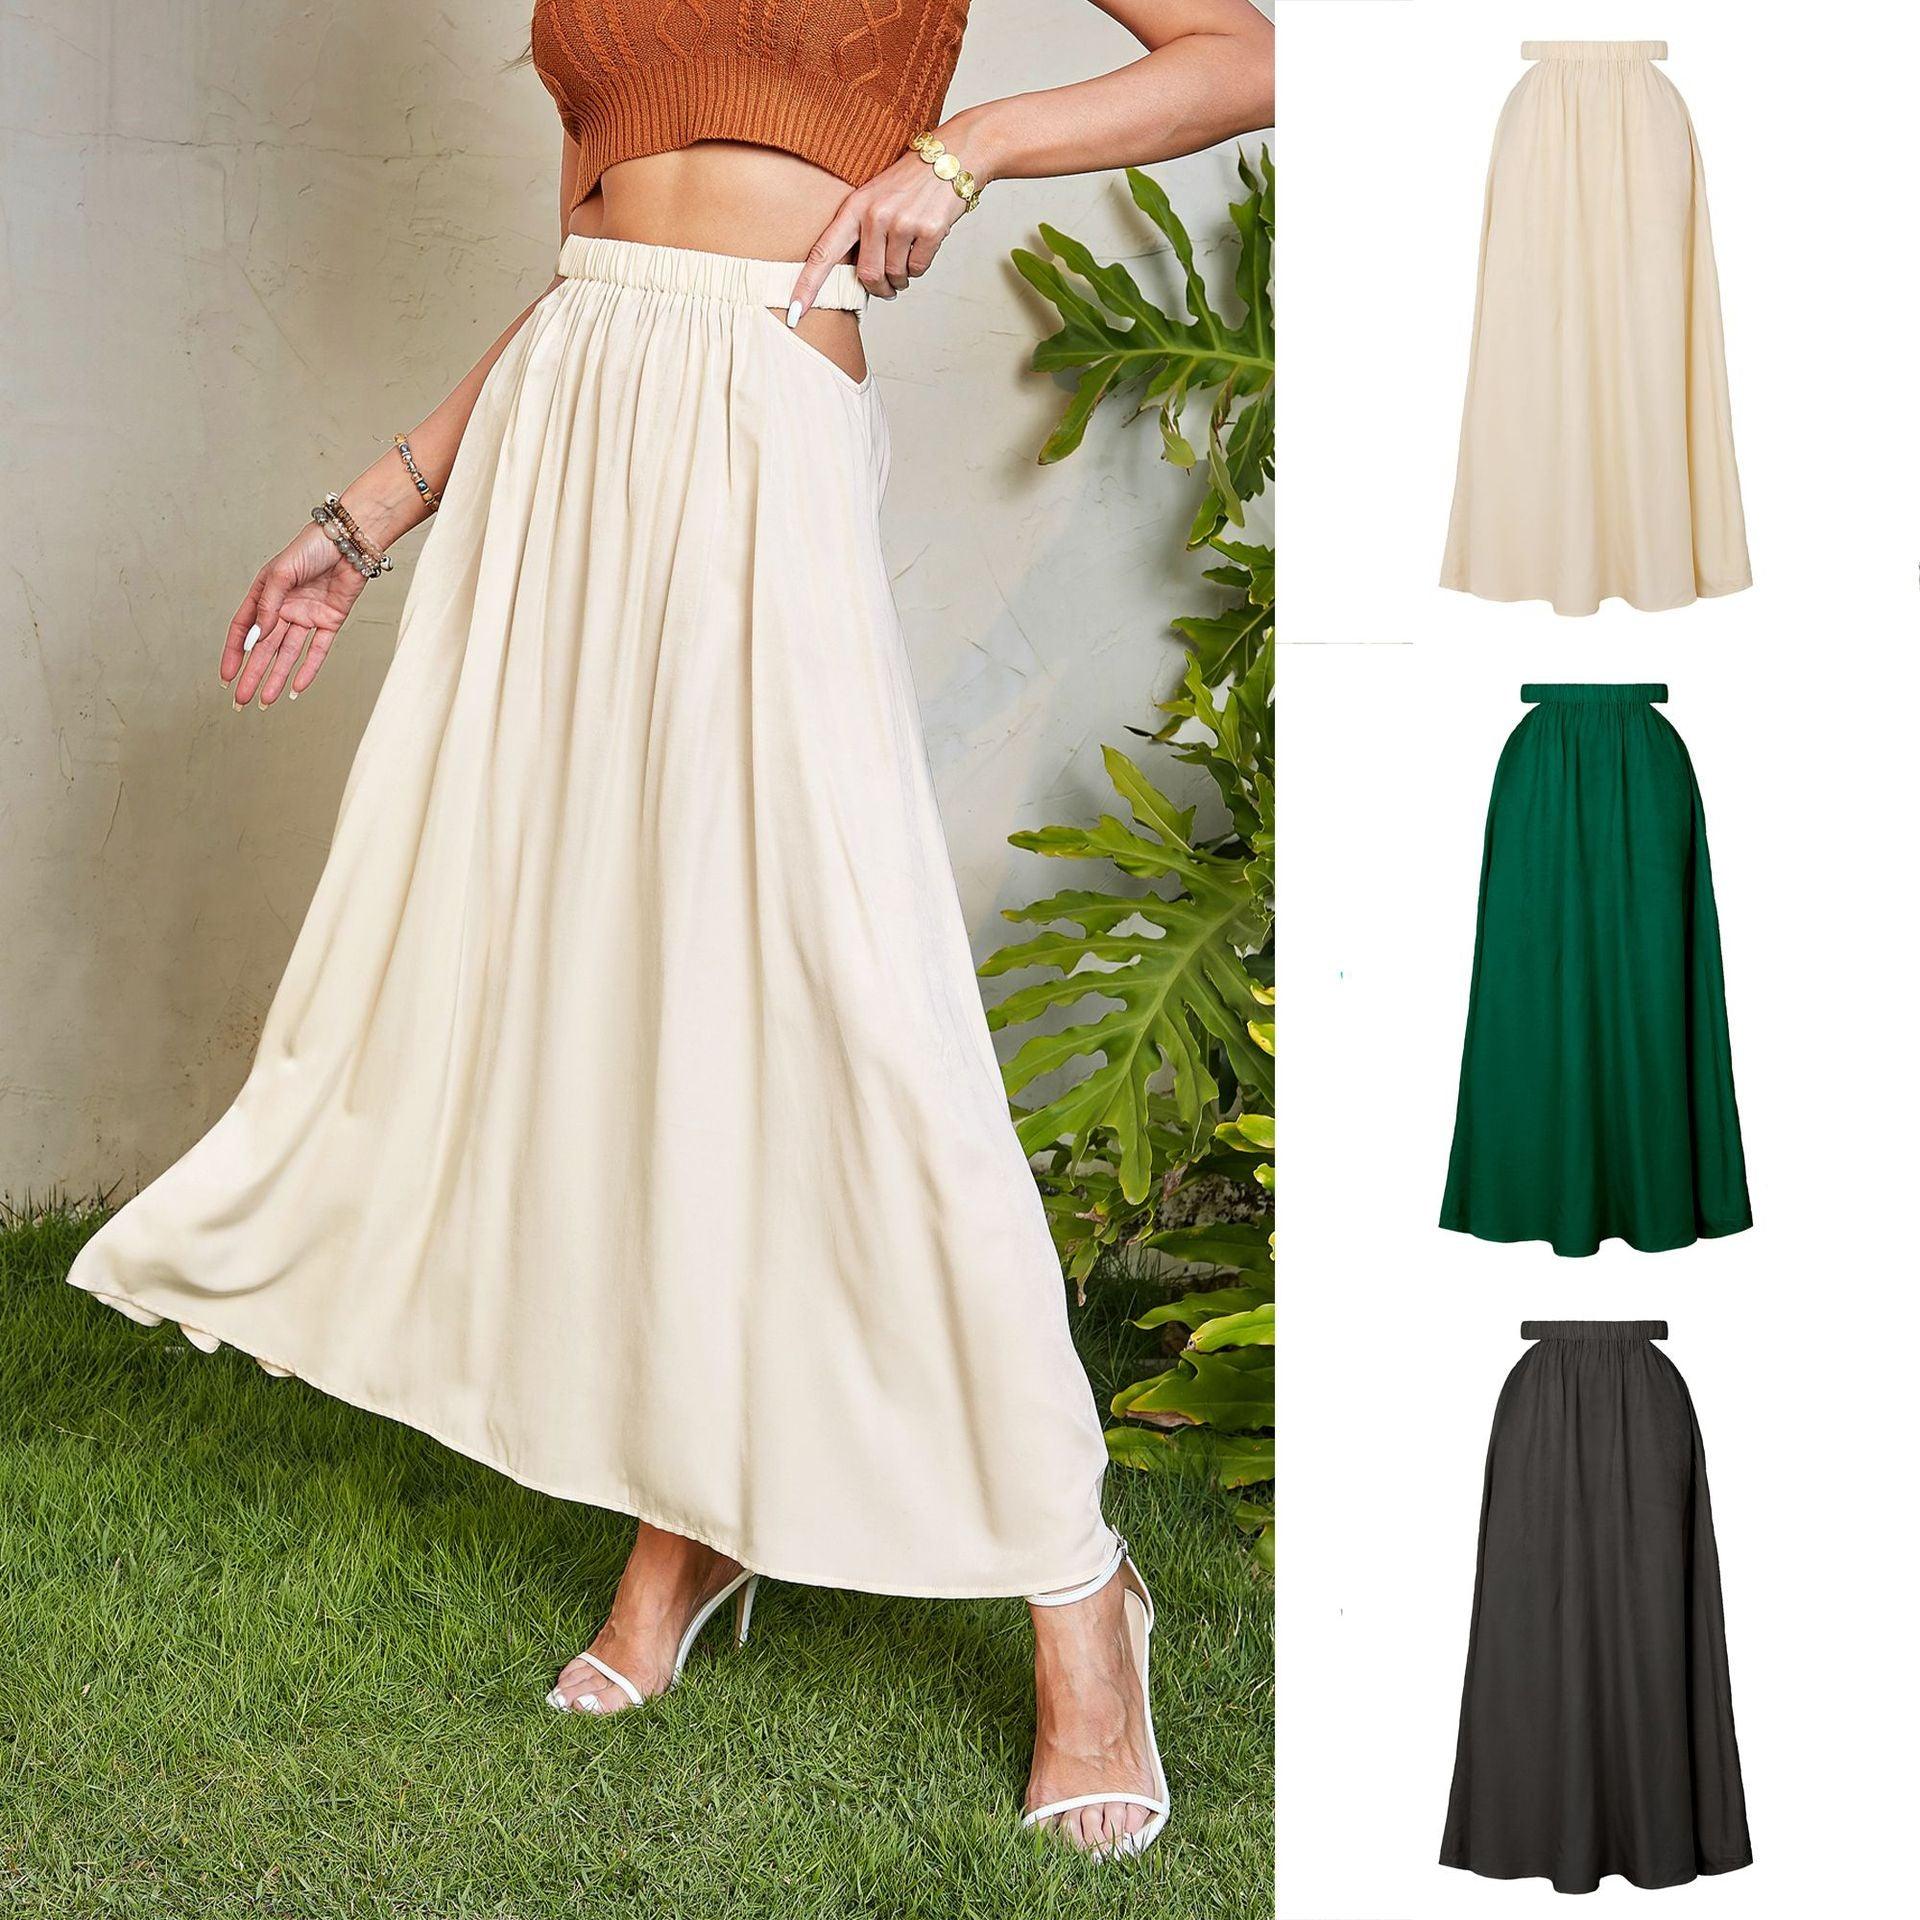 Elegant High-Waist Long Skirt for Women – Hollow Design with Subtle Stretch - Glinyt